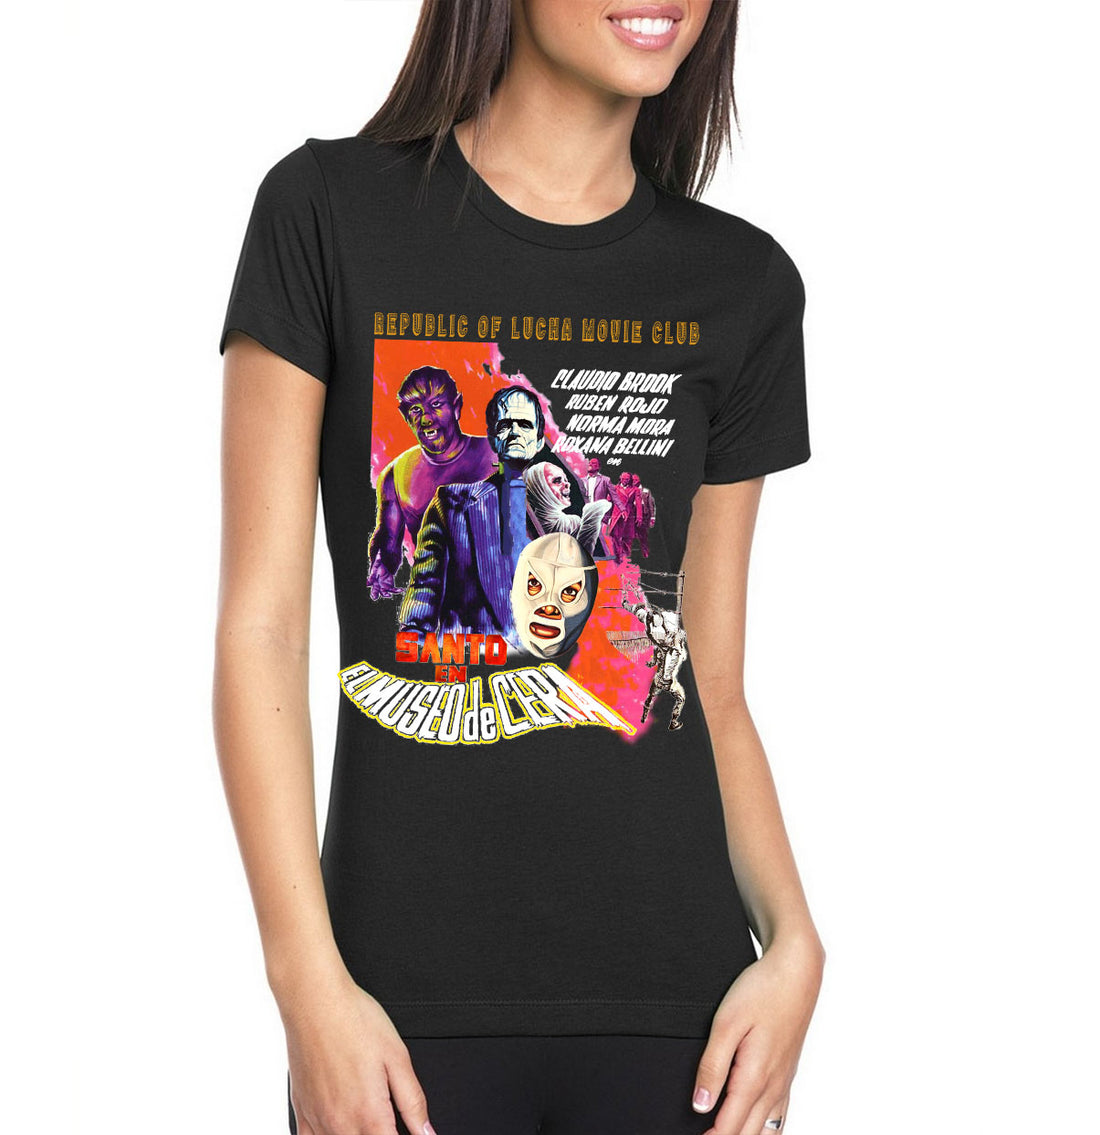 Lucha Movie Club: "SANTO IN THE WAX MUSEUM" t-shirt